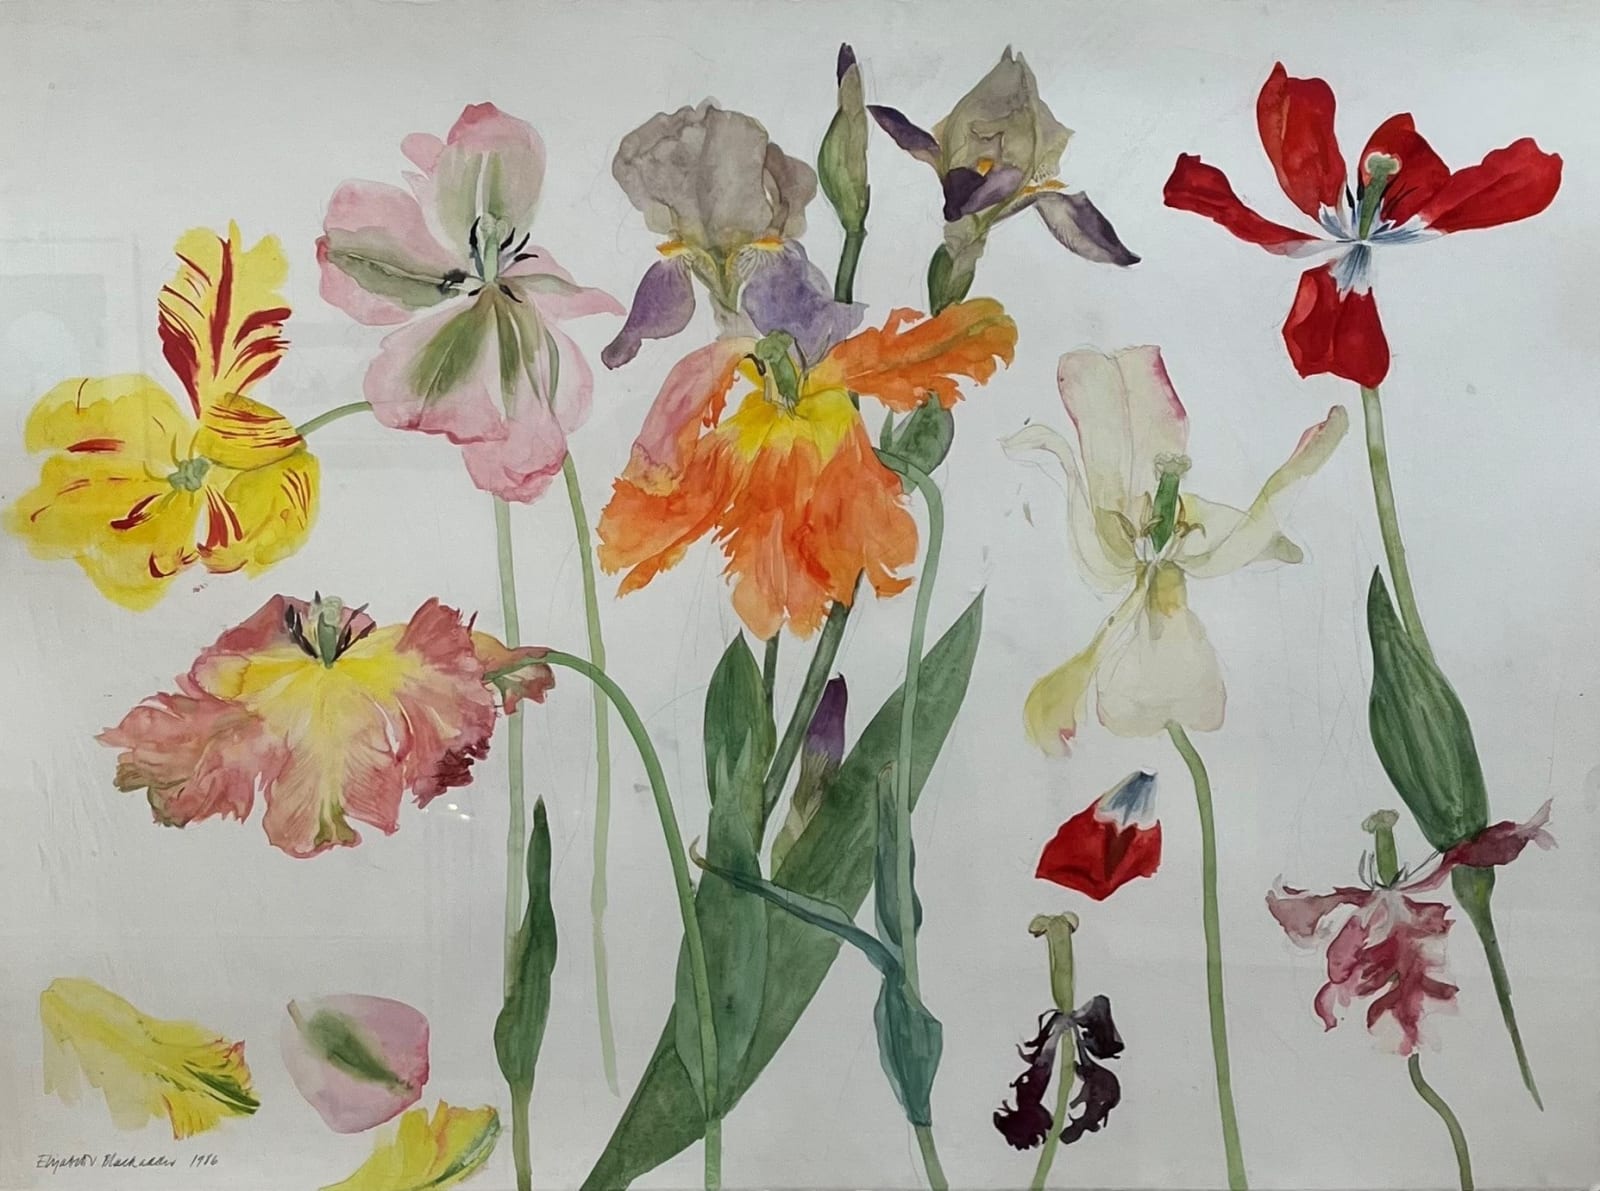 ELIZABETH BLACKADDER, Tulips and Irises